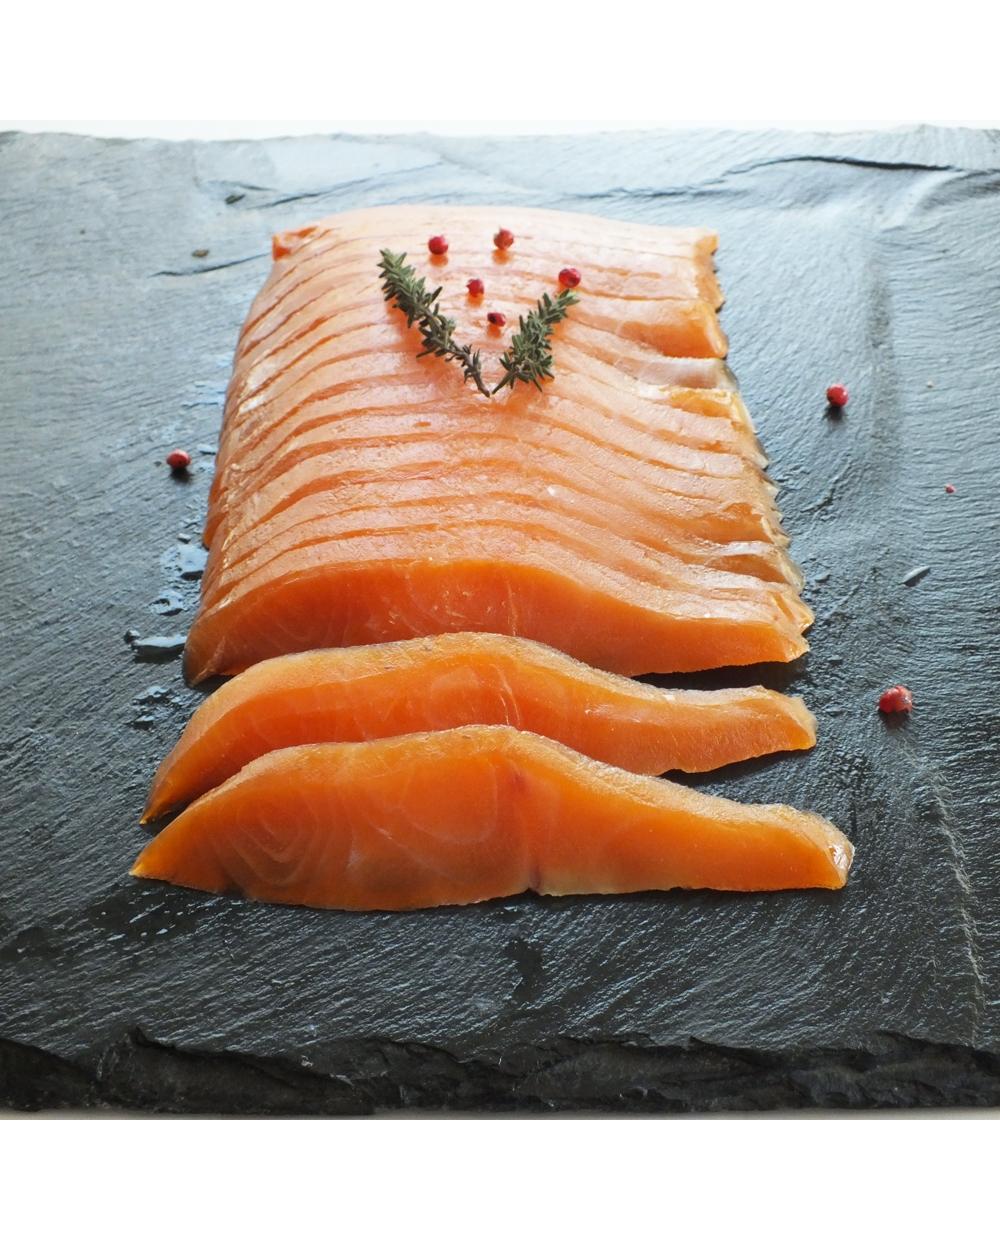 Truite fumee sans peau tranchees facon sashimi 200g